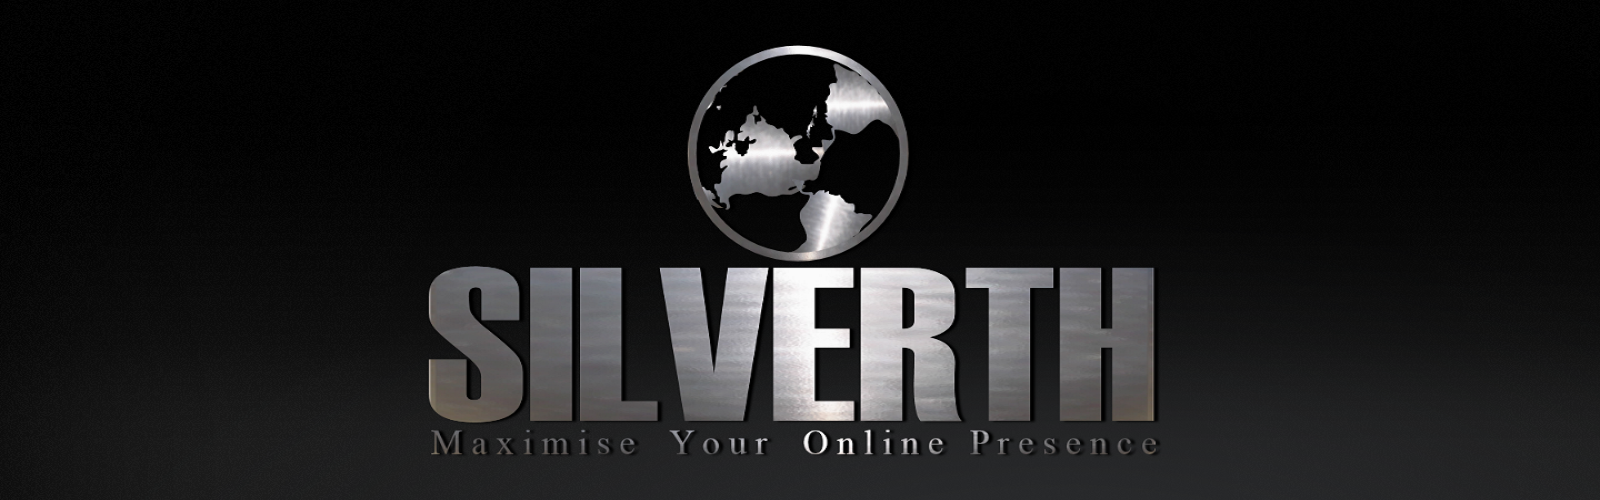 Silverth Official Logo - silverth.com